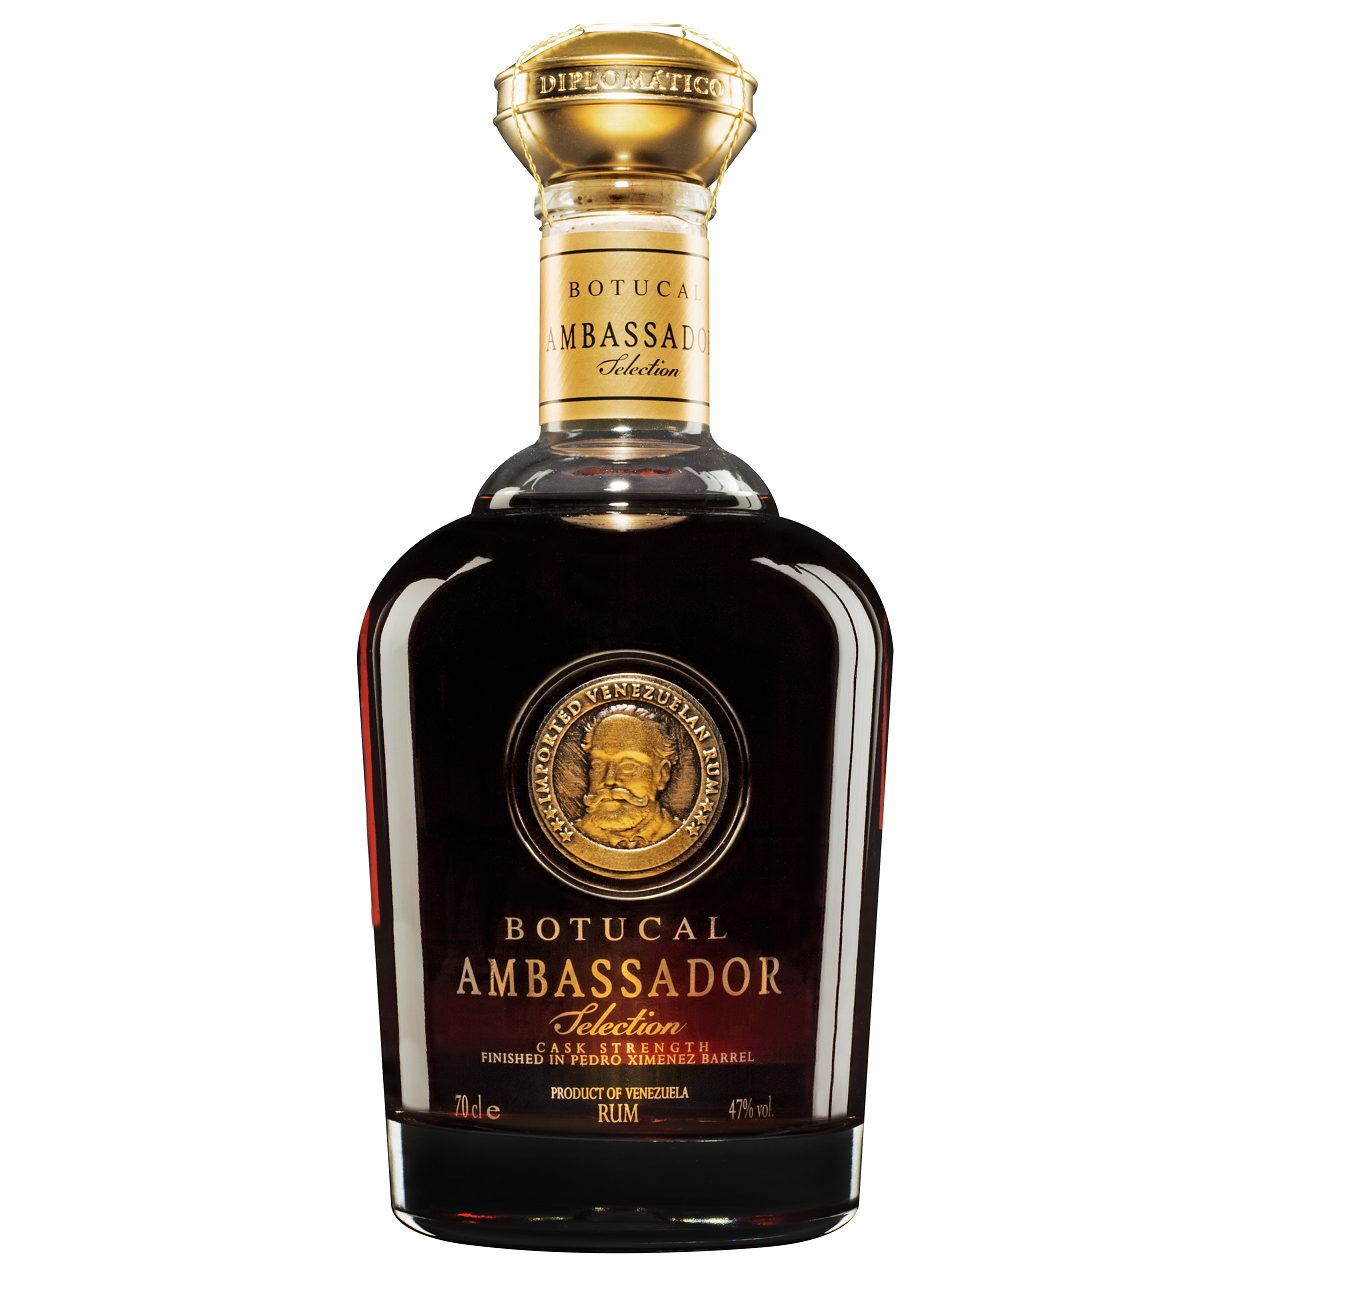 Botucal Rum Ambassador 47% 700 ml jetzt kaufen